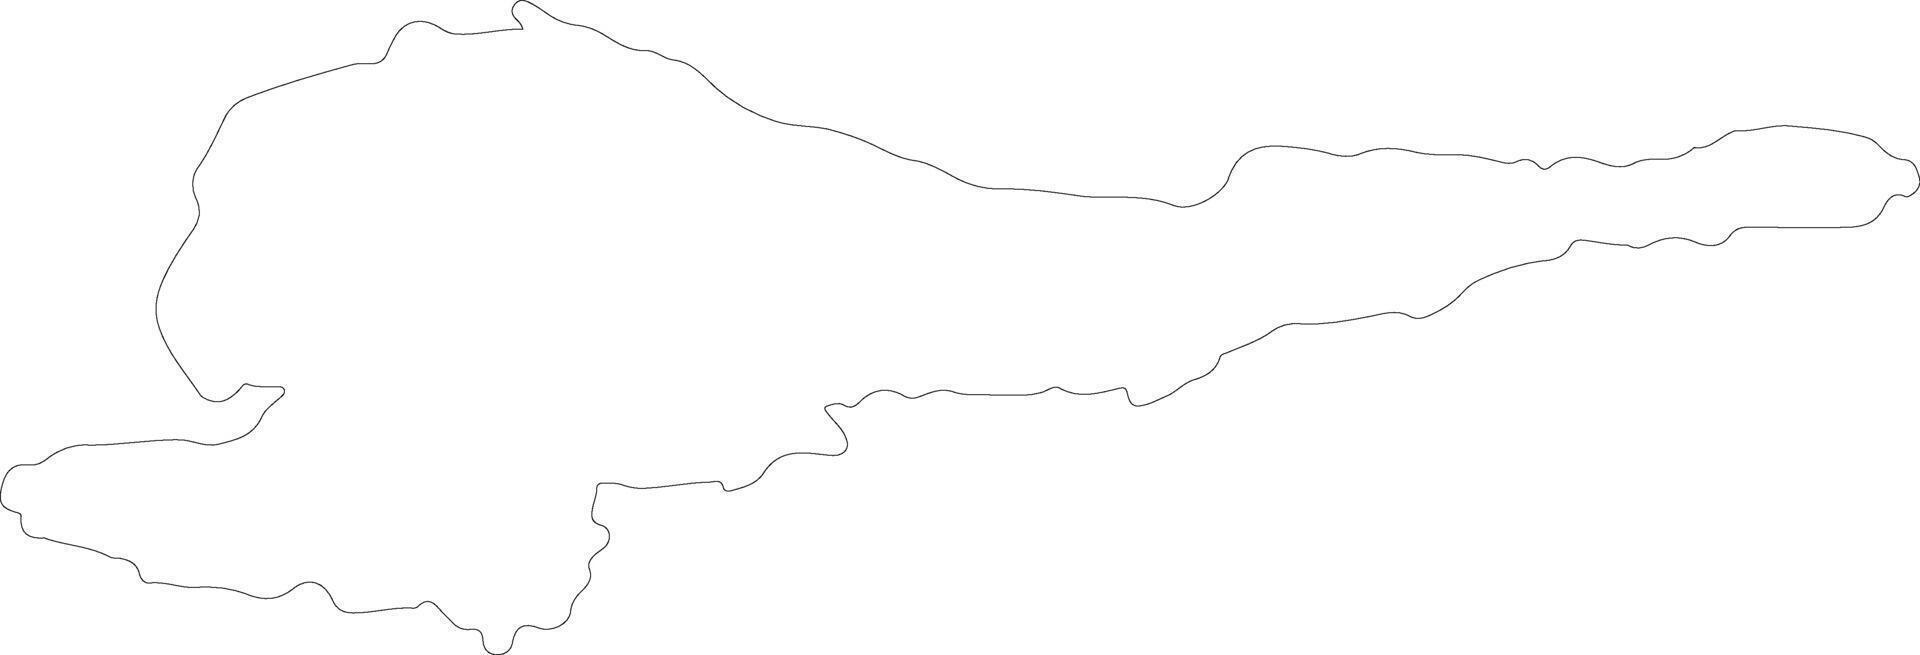 chuy Kyrgyzstan schema carta geografica vettore